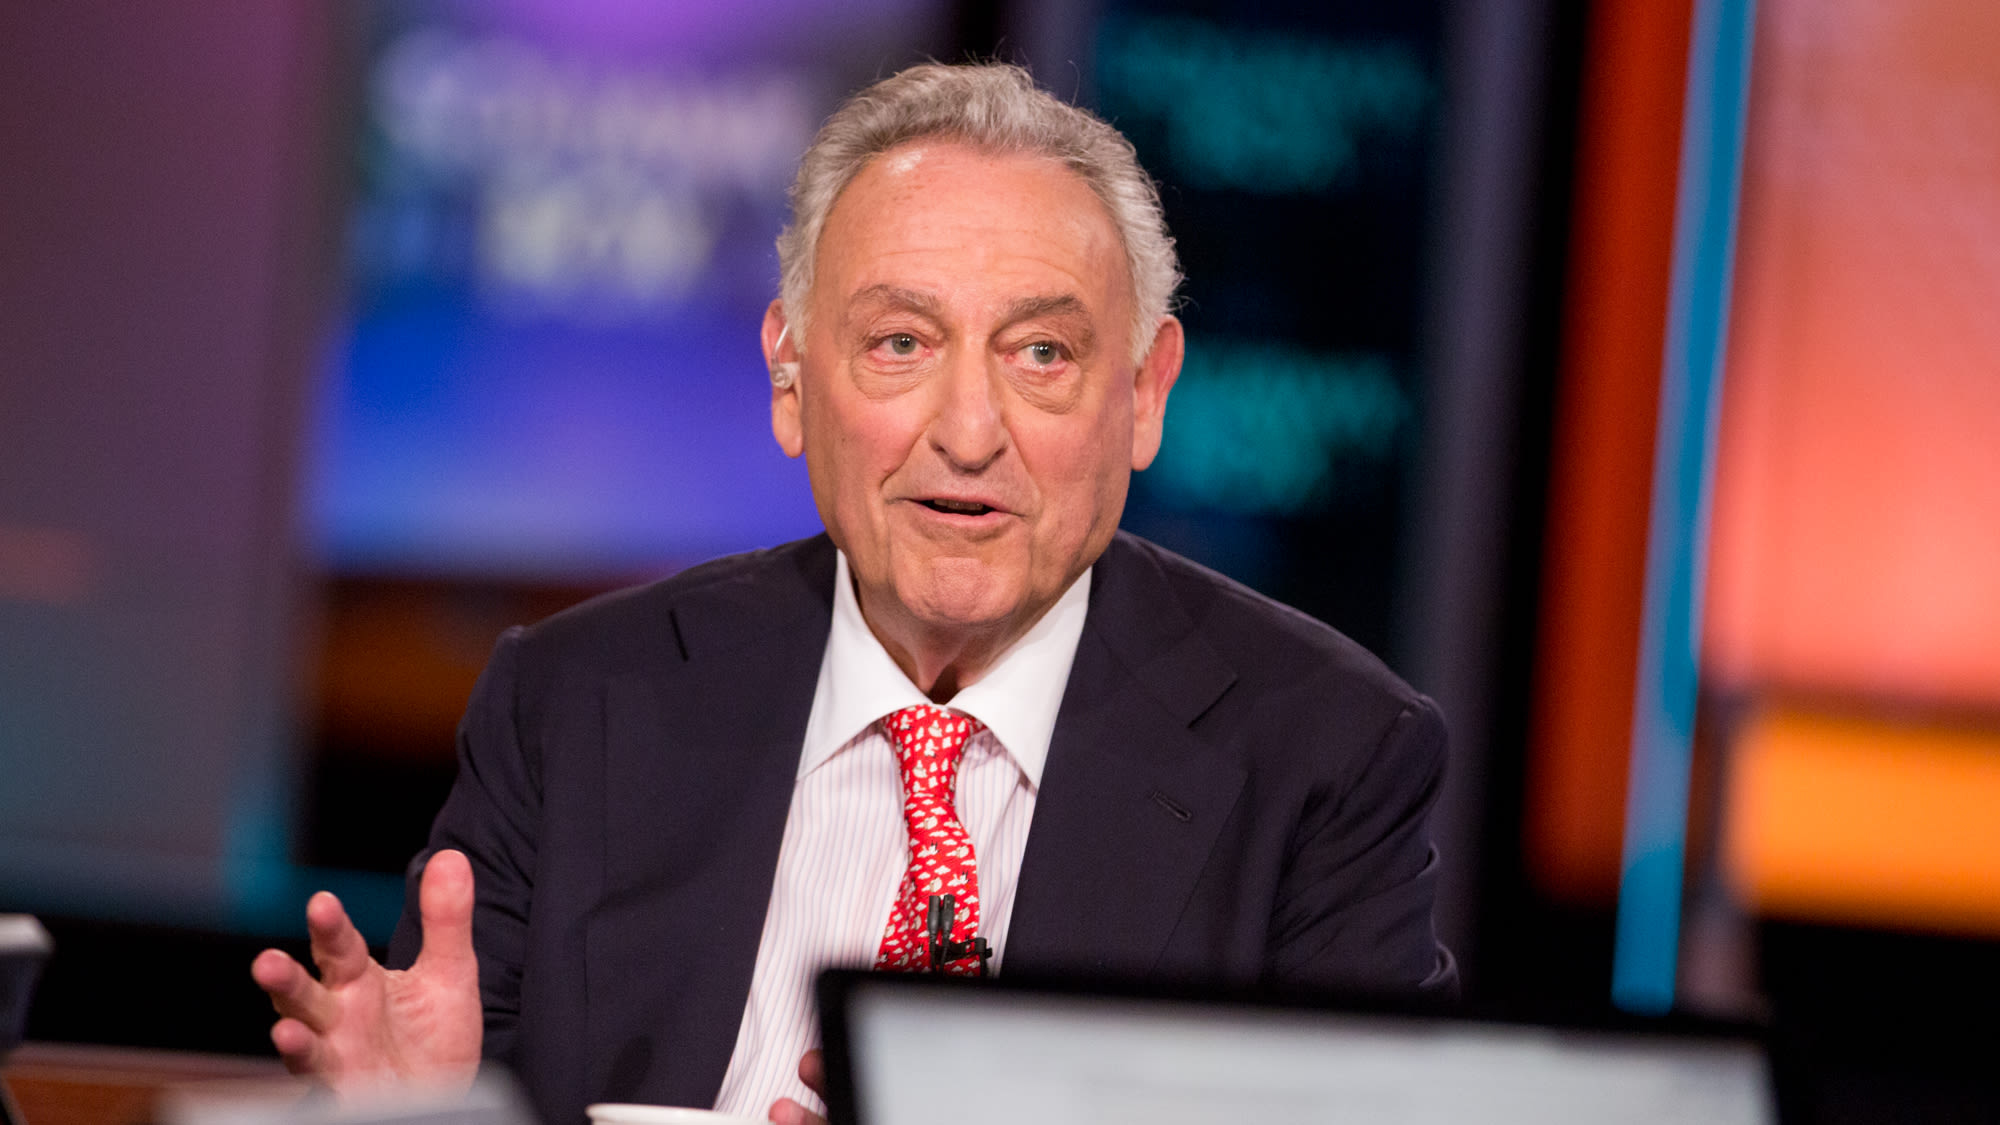 Sandy Weill calls Morgan Stanley and Charles Schwab ‘superb buys’